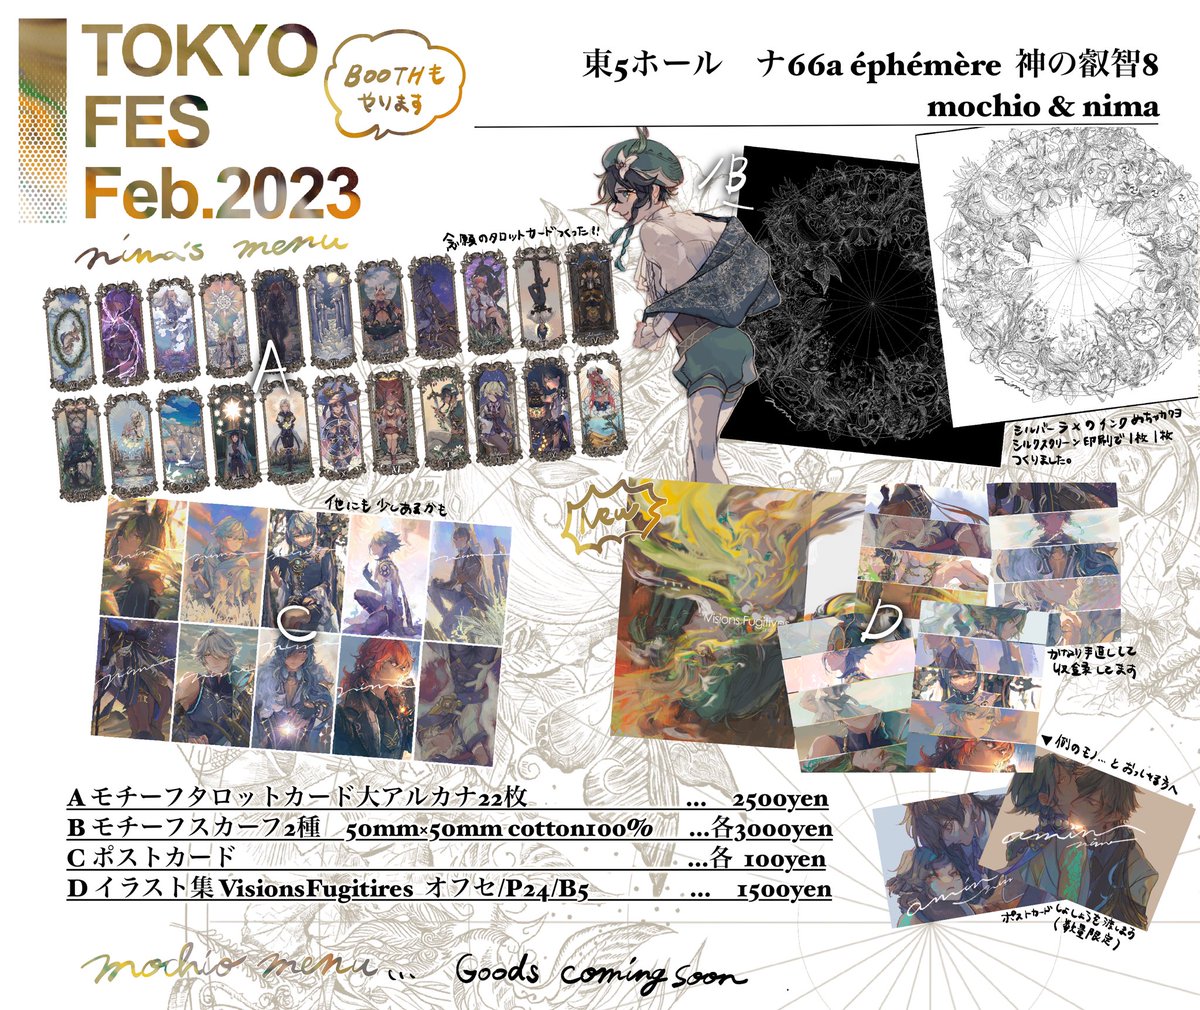 TOKYO FES Feb.2023 神の叡智8 2/12
東5ホール ナ66a  éphémère  
nima &mochio

もちおさん(@mocchiriiiii )と一緒に参加します!!
お品書きをどうぞ! 